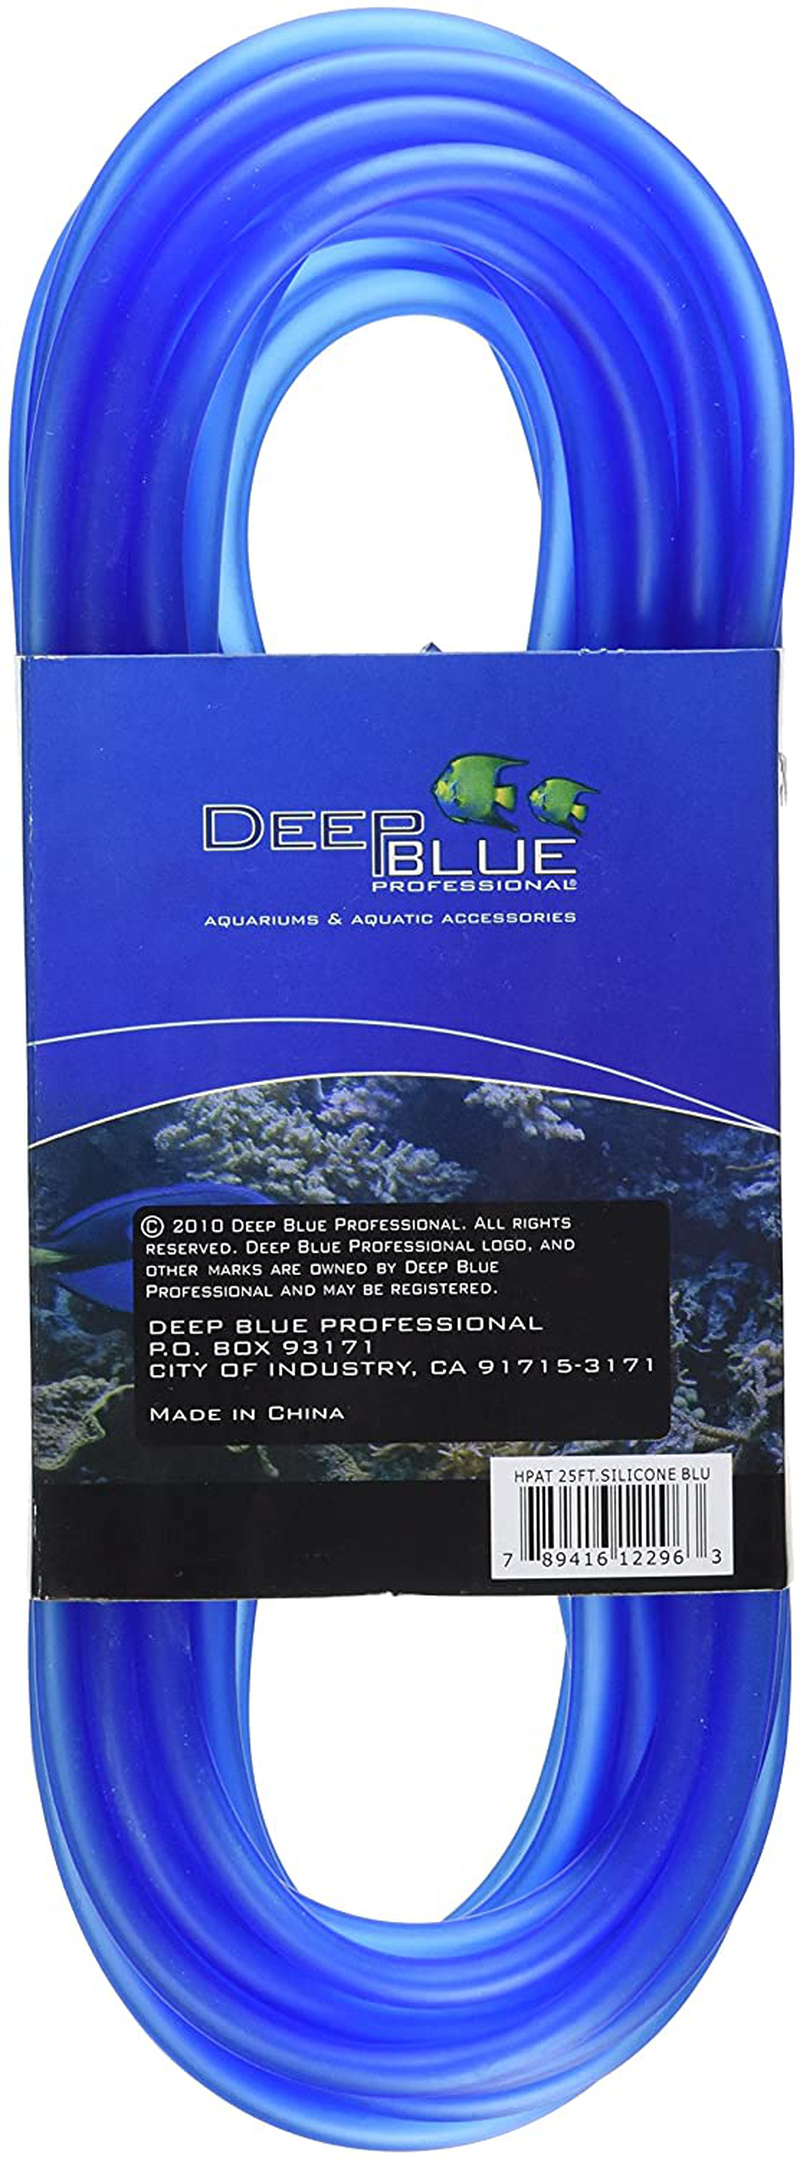 Deep Blue Professional ADB12296 Silicone Air Tubing for Aquarium, 25-Feet (Assorted Colors) Animals & Pet Supplies > Pet Supplies > Fish Supplies > Aquarium & Pond Tubing Deep Blue Professional   